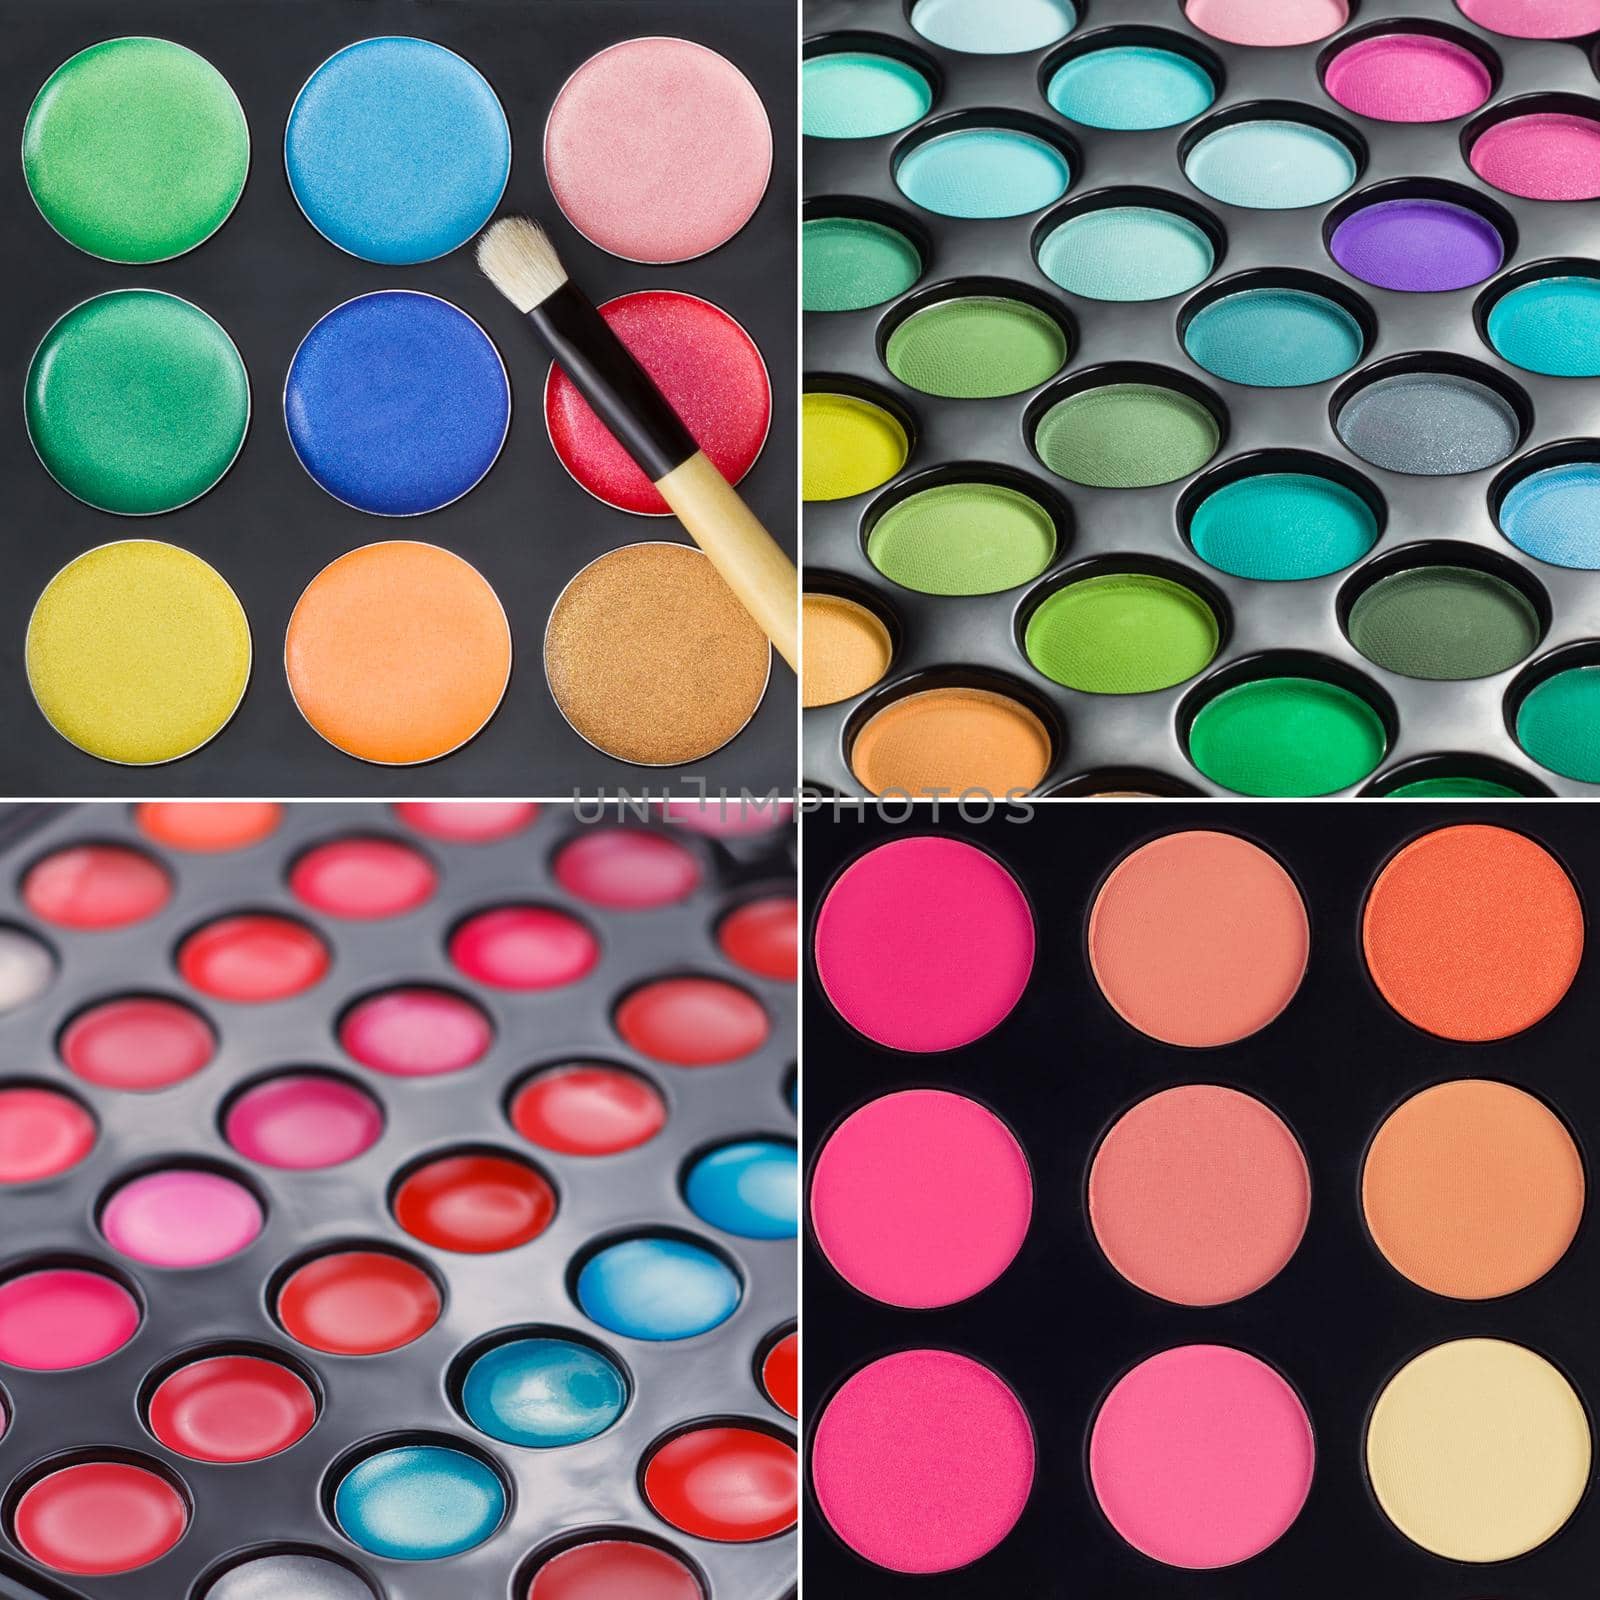 Set of colorful makeup palettes. Makeup background